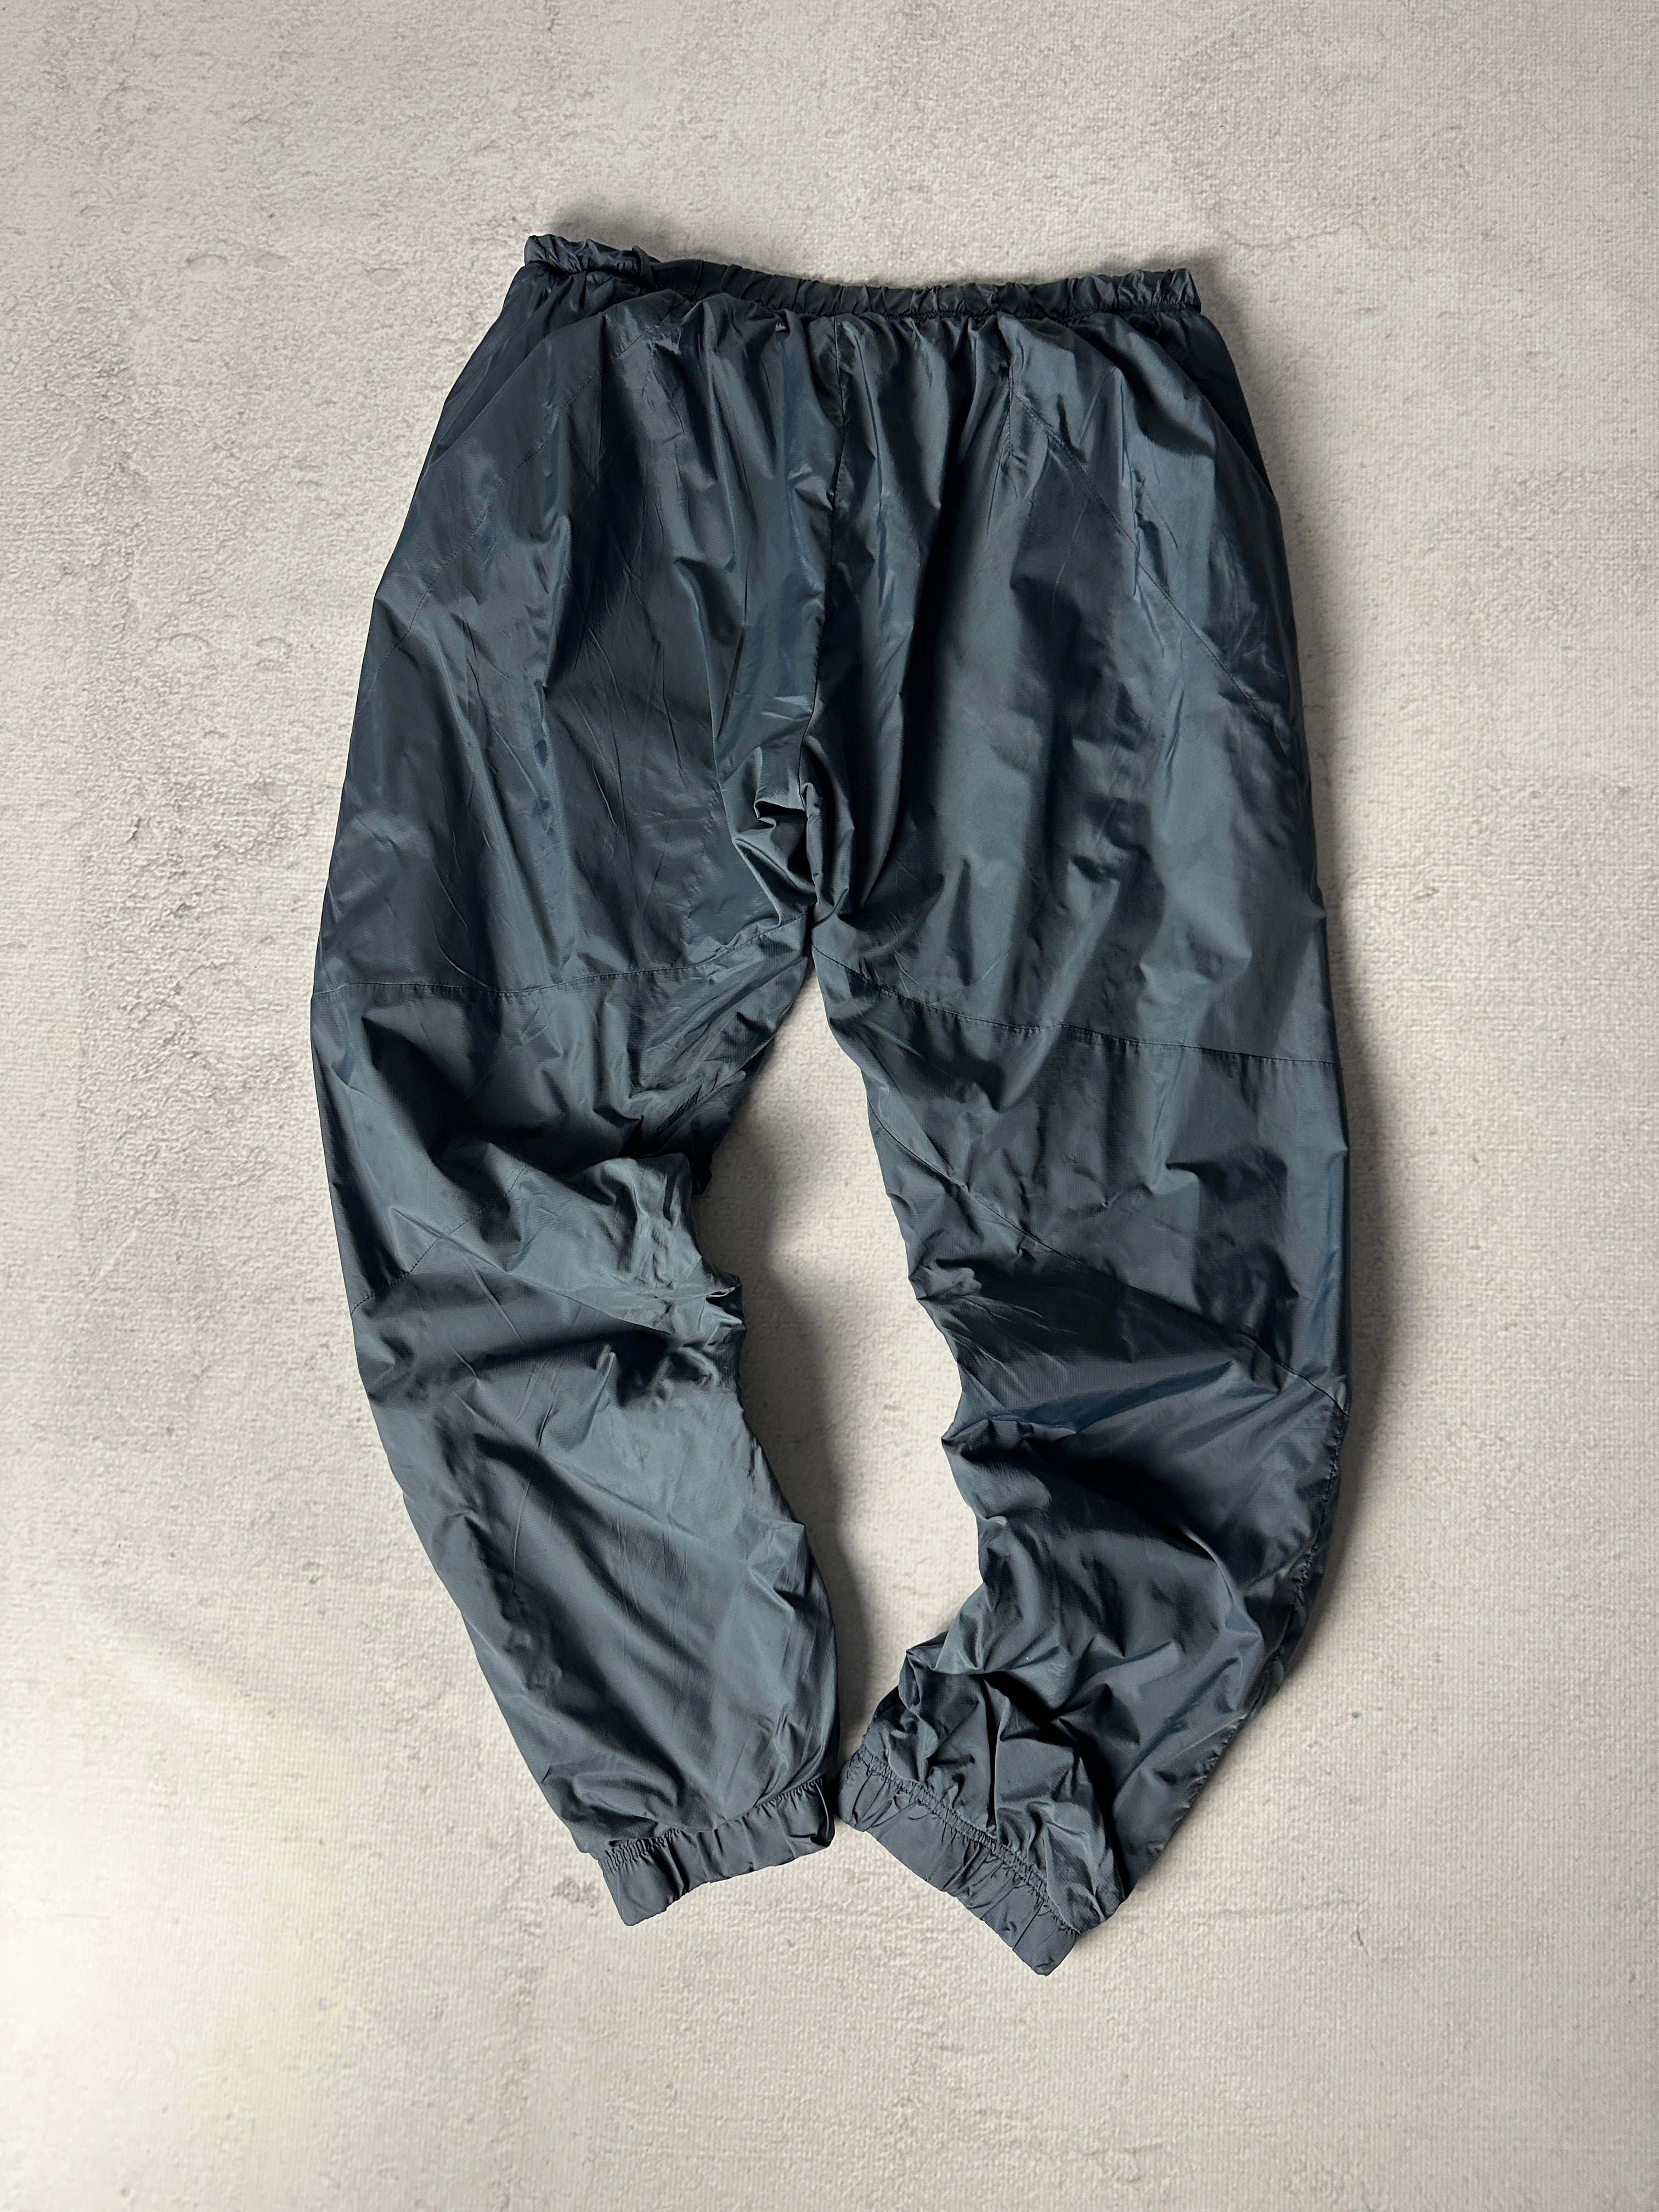 Vintage Reebok Classic Cuffed Track Pants - Men's XL